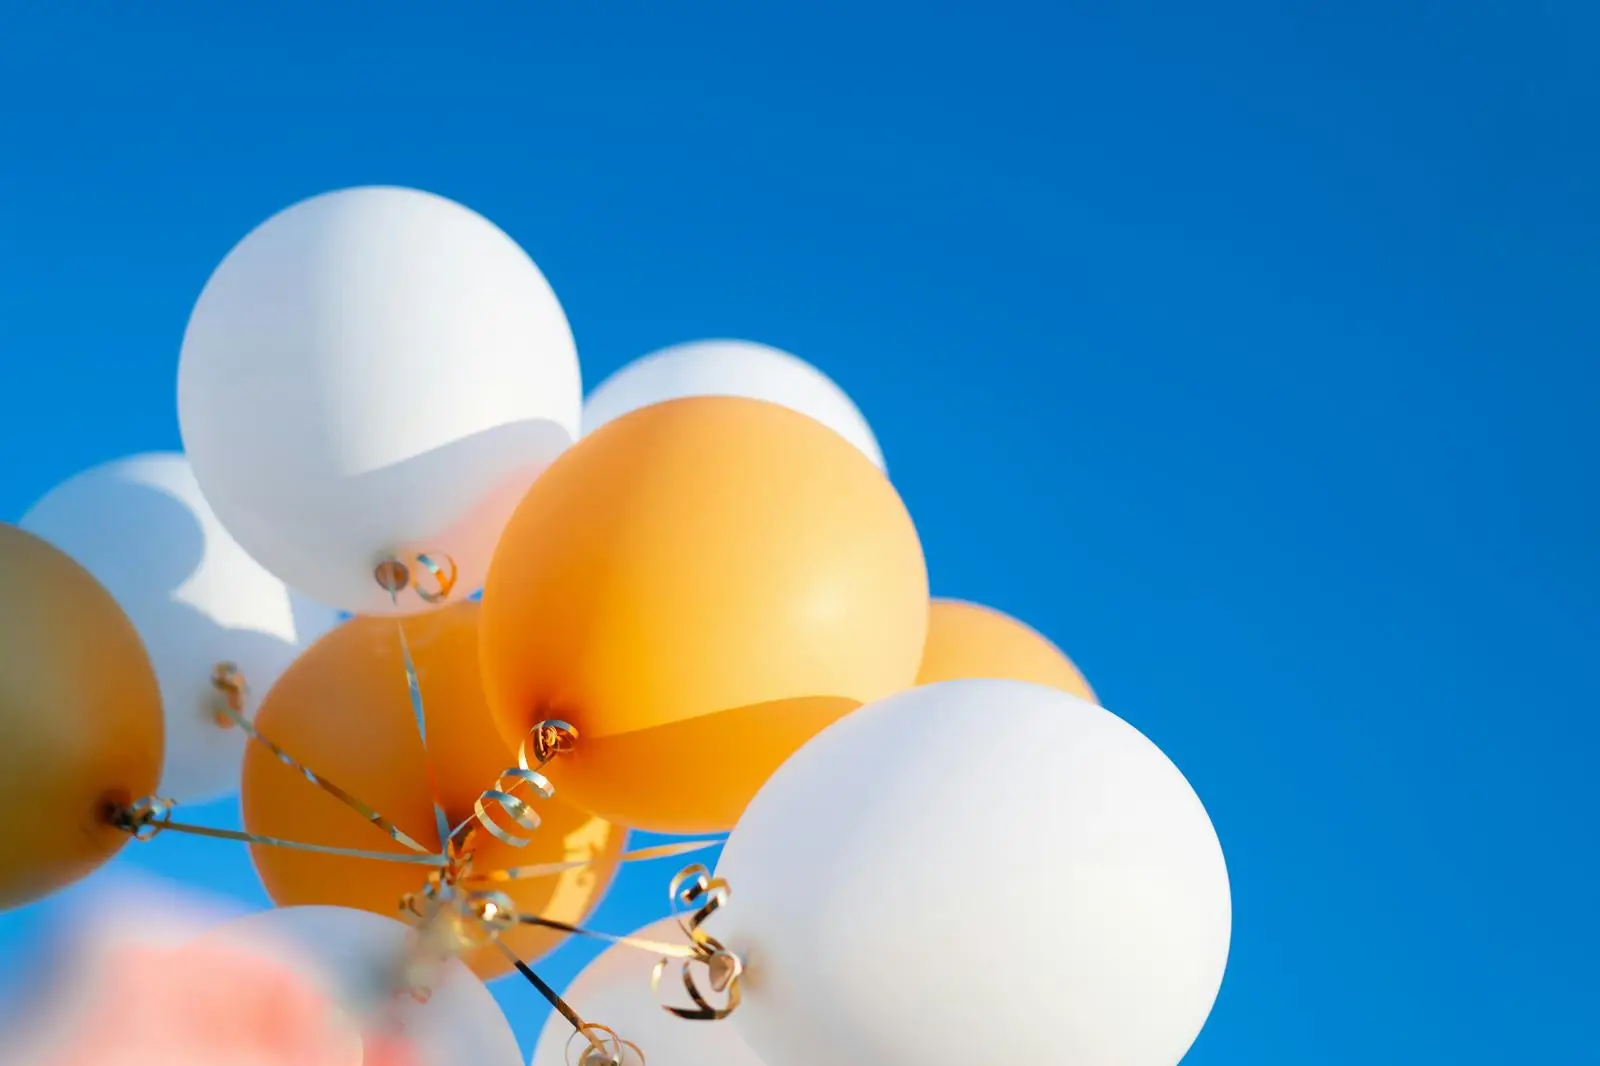 Mental Age Test Birthday balloons